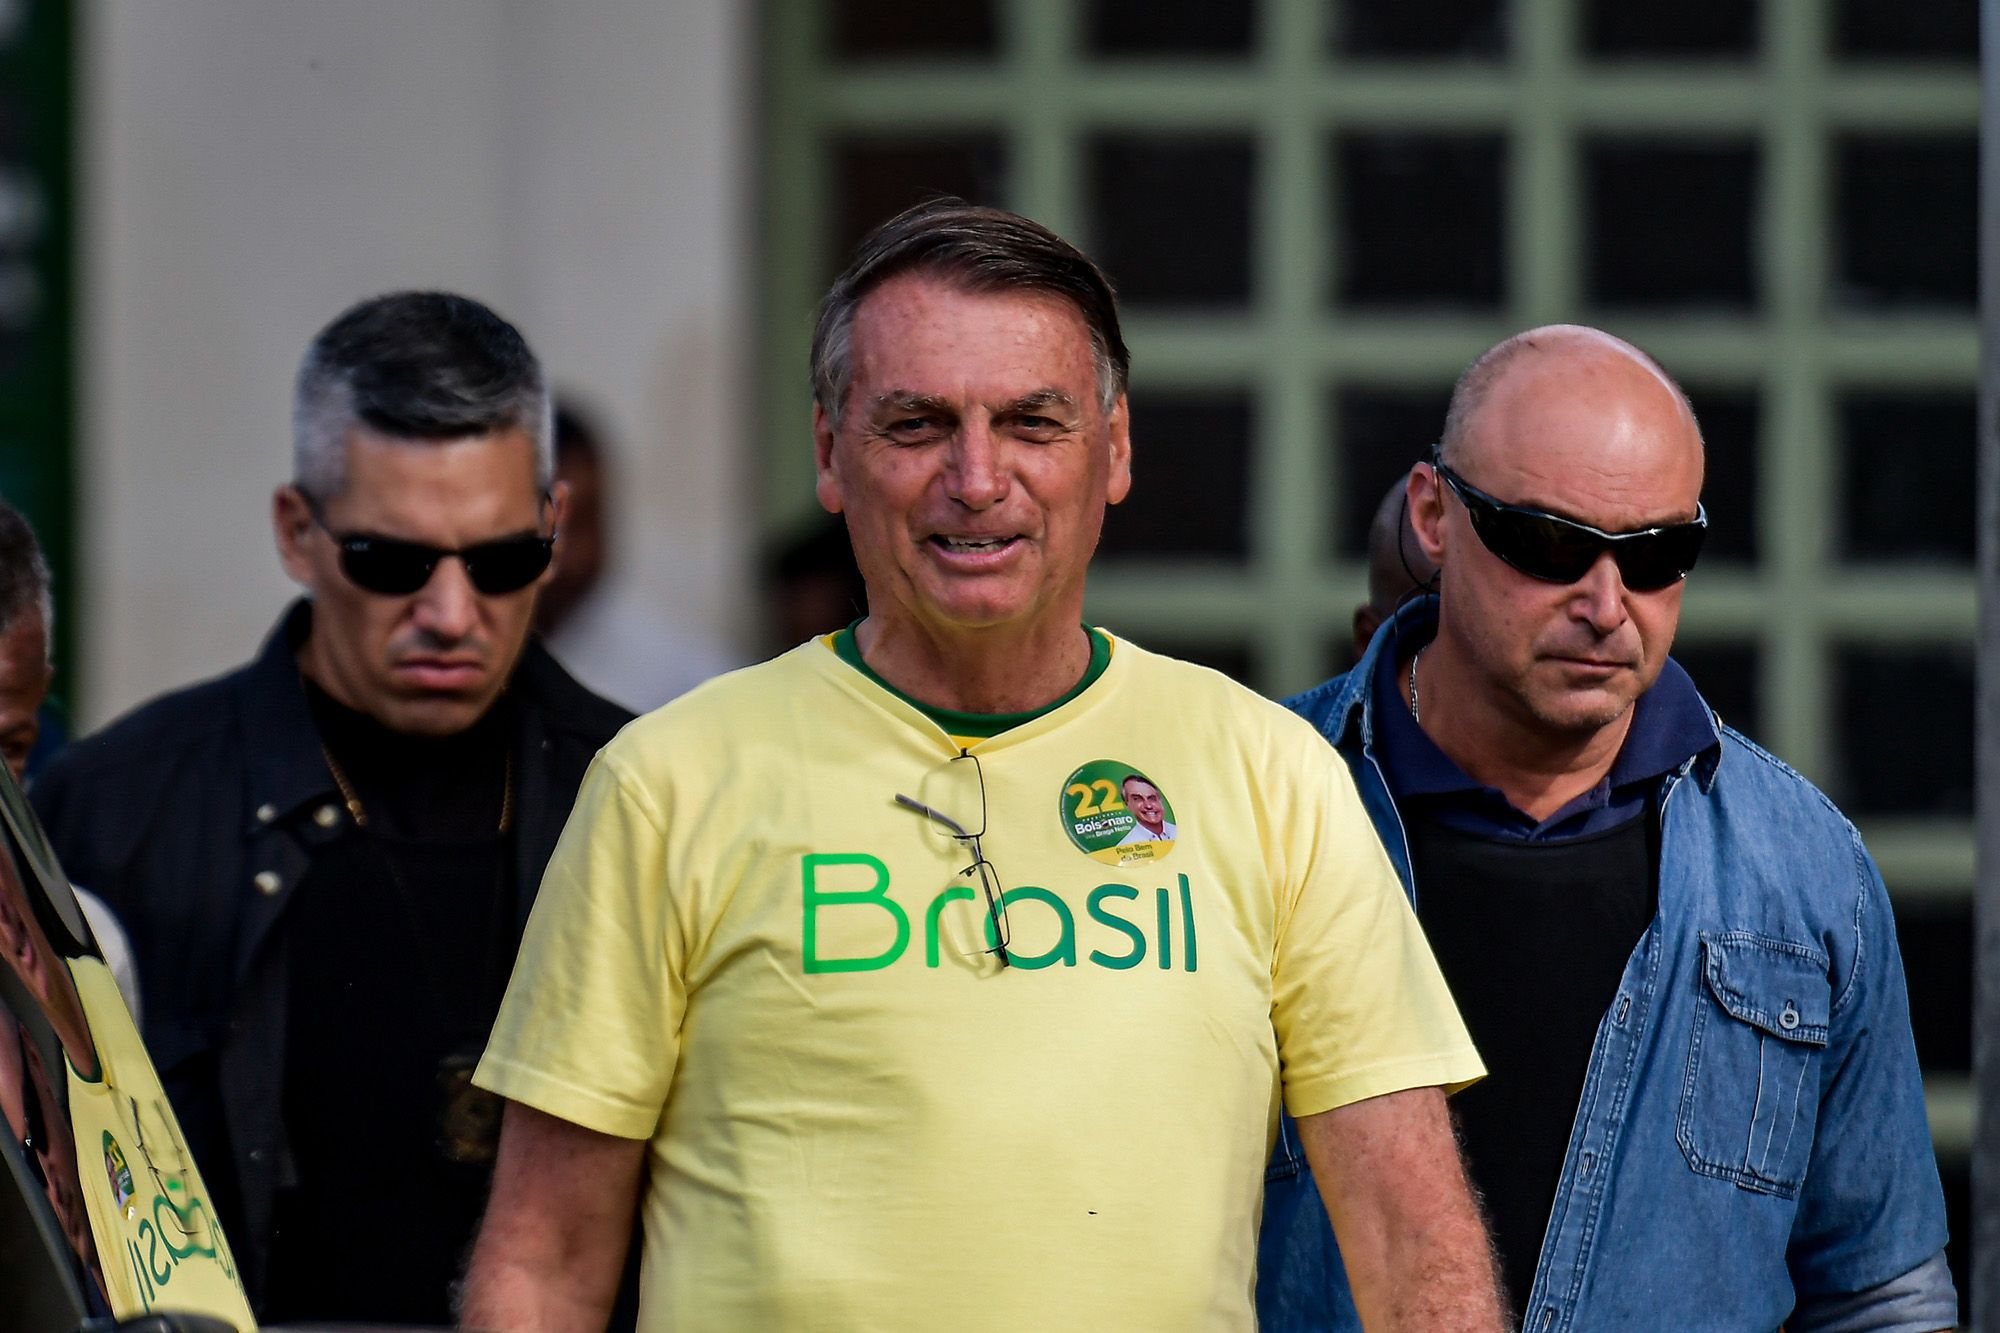 Brazil's Top Footballers Lean Toward Bolsonaro in Polarized Race